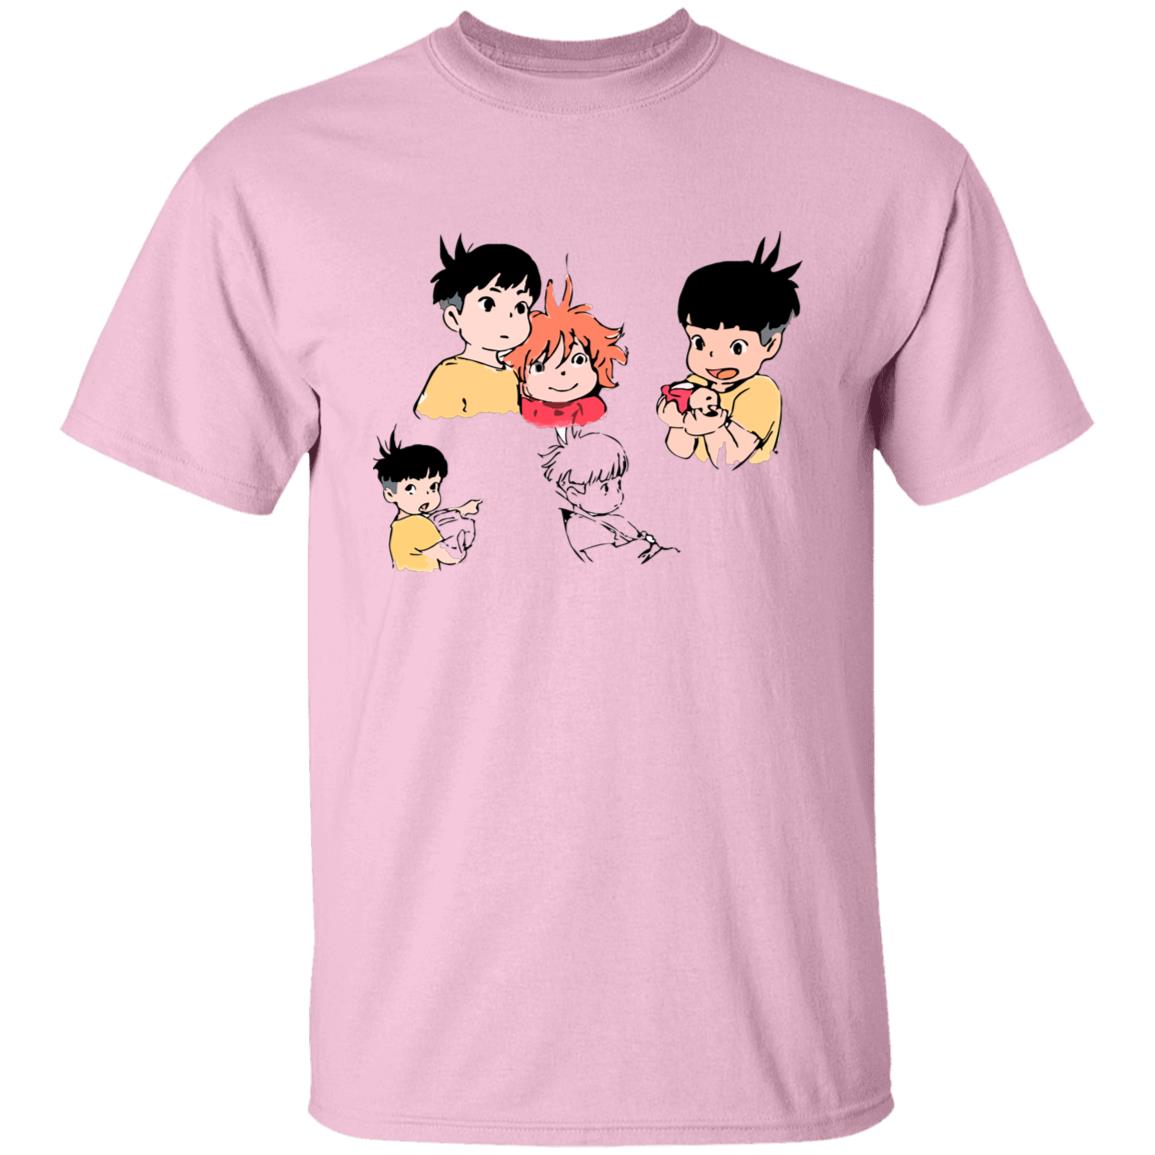 Ponyo and Sosuke Sketch T Shirt